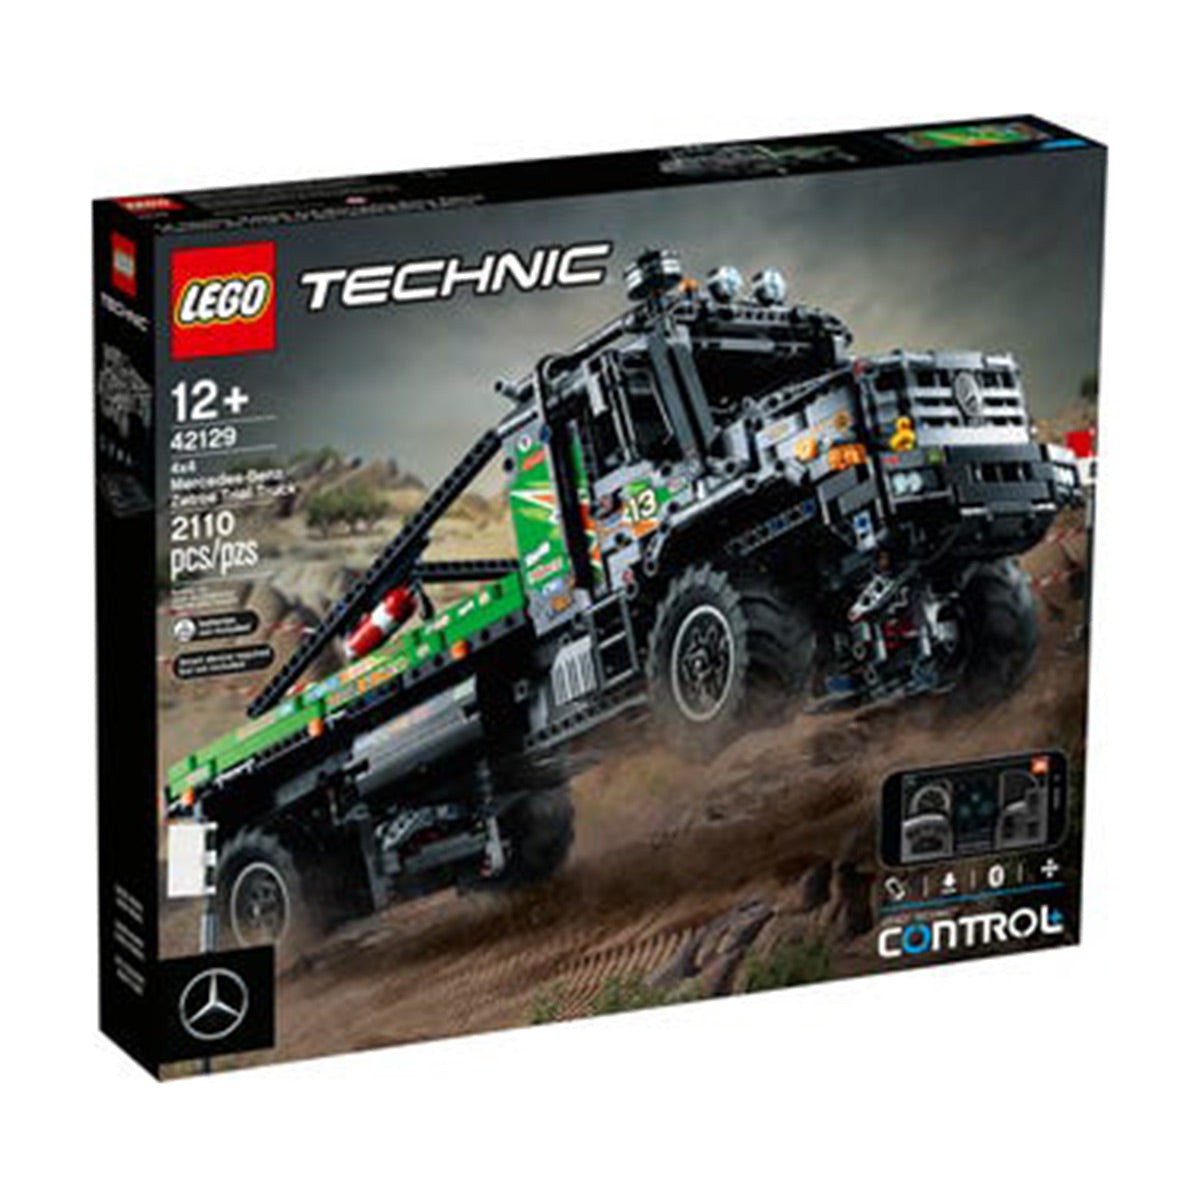 LEGO JOUET K.I.D. INC Toys & Games LEGO Technic 4x4 Mercedes-Benz Zetros Trial Truck, 42129, Ages 12+, 2129 Pieces 673419340359